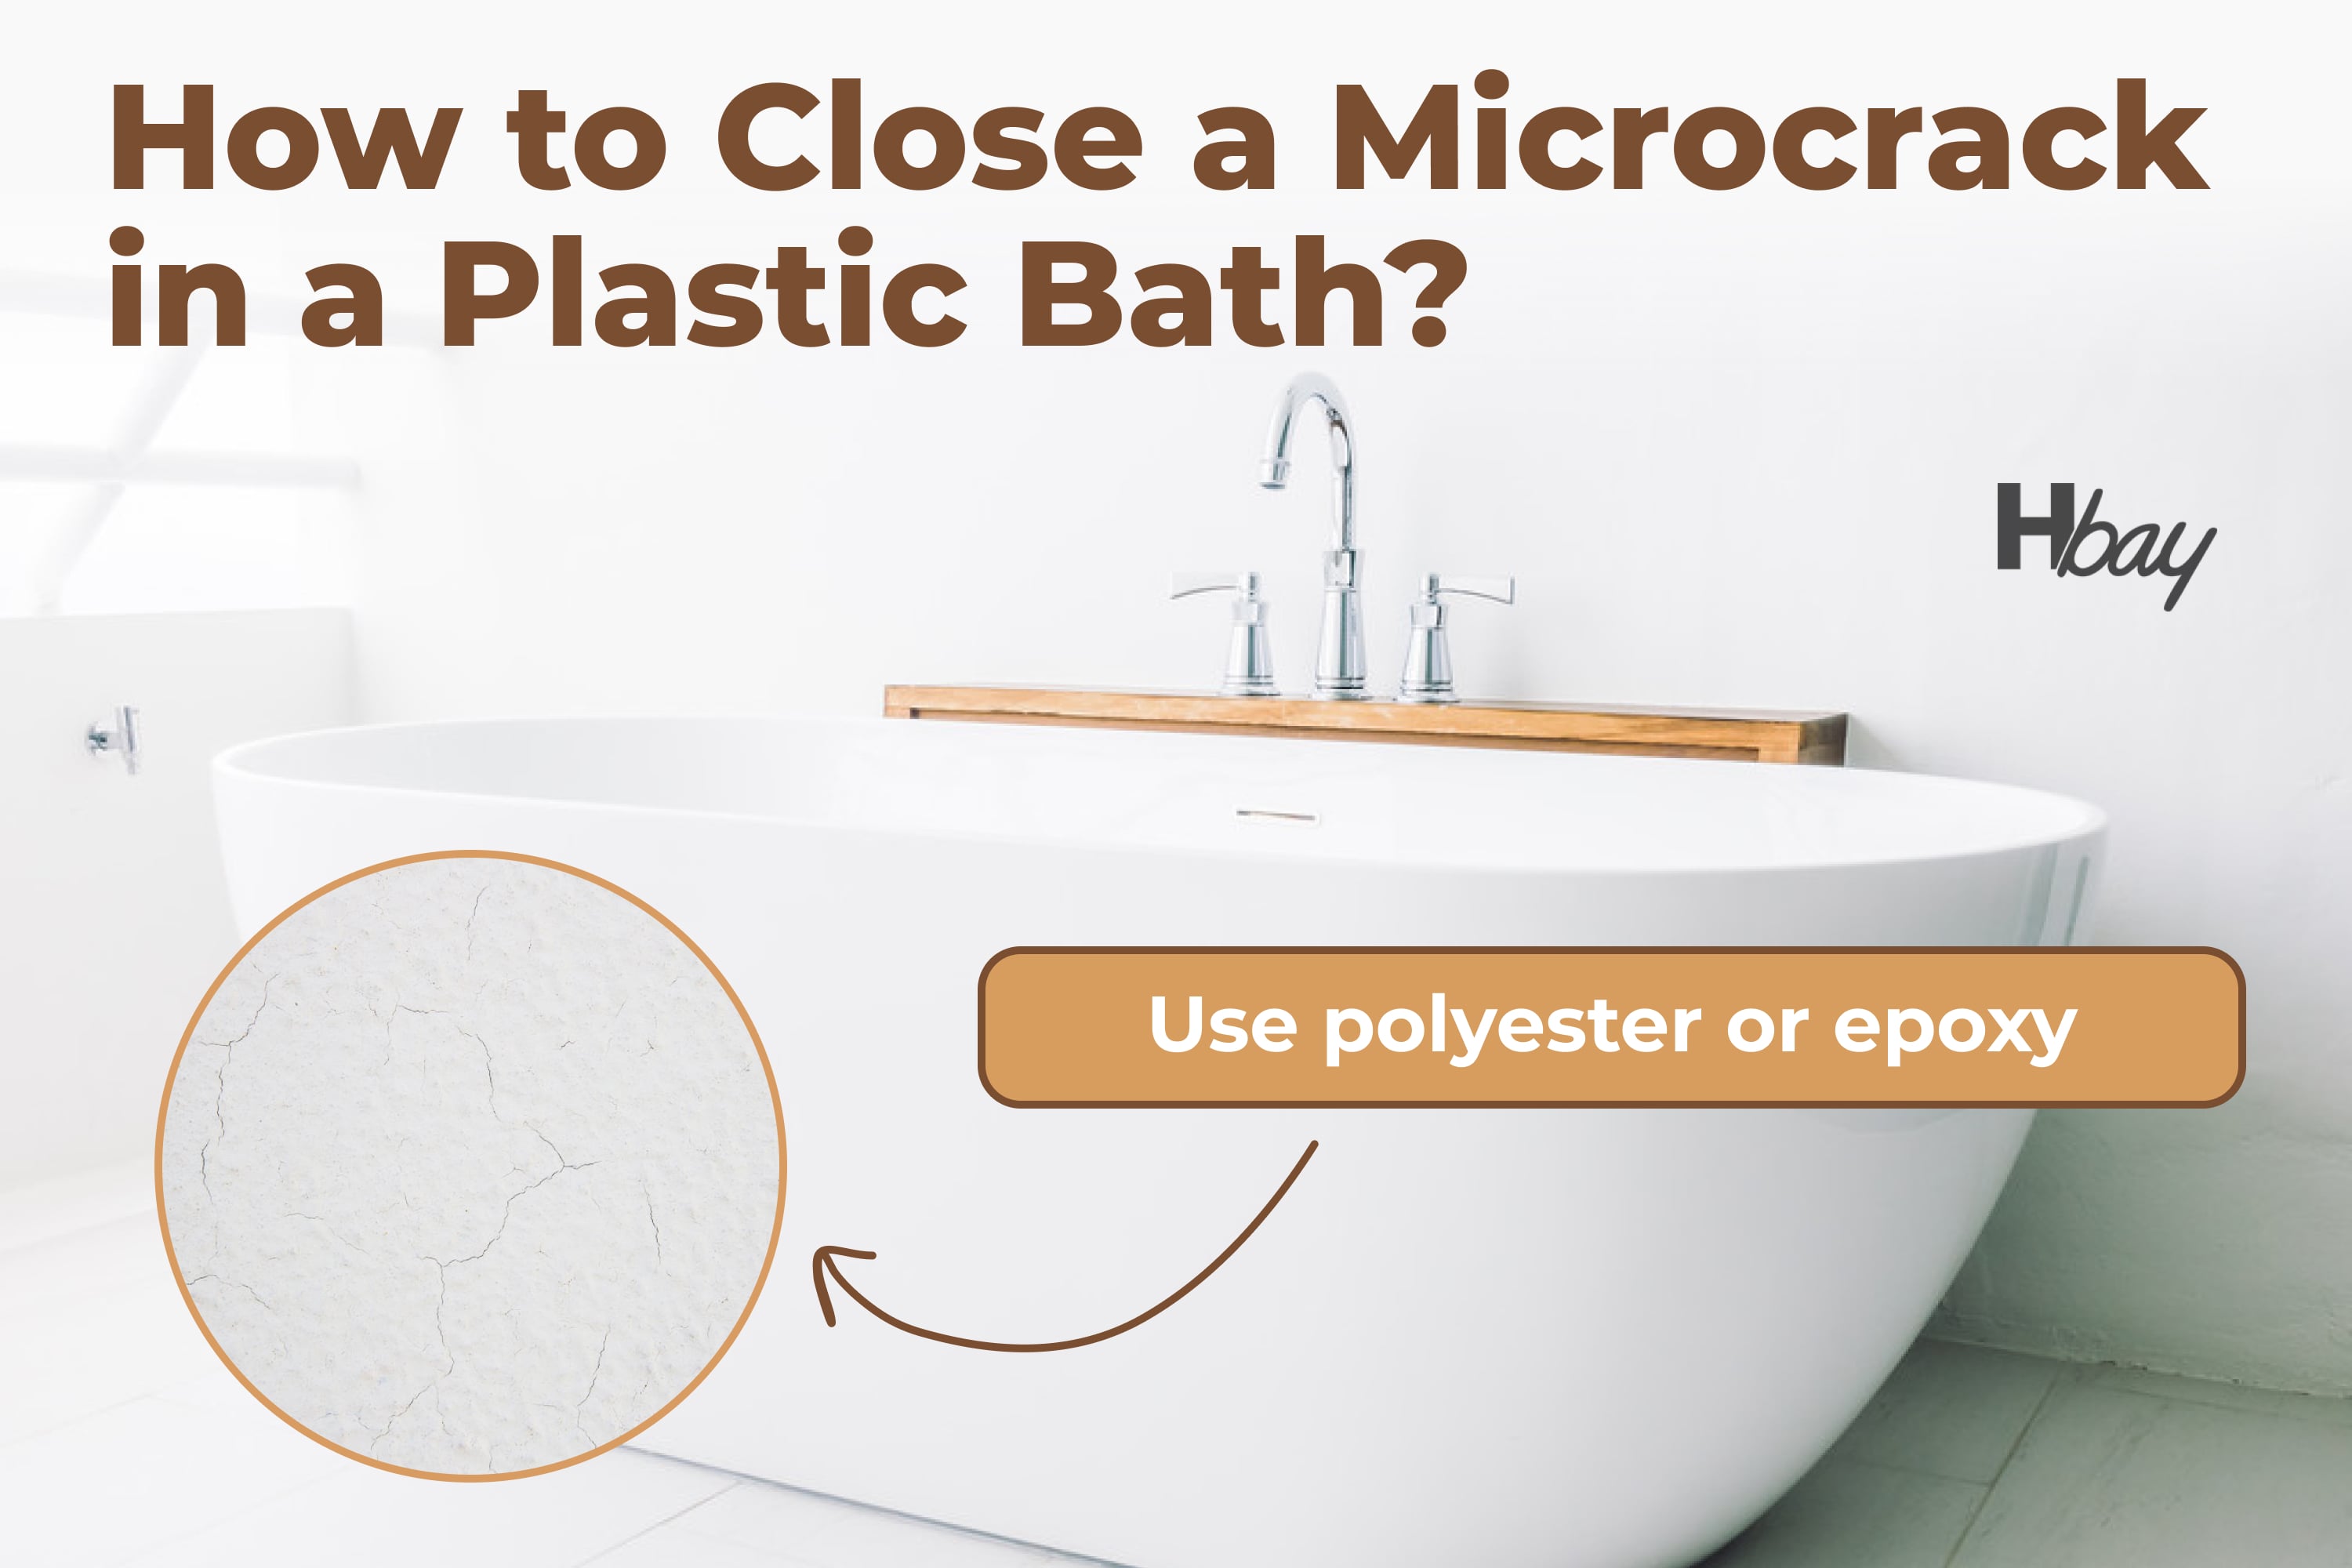 How to close a microcrack in a plastic bath